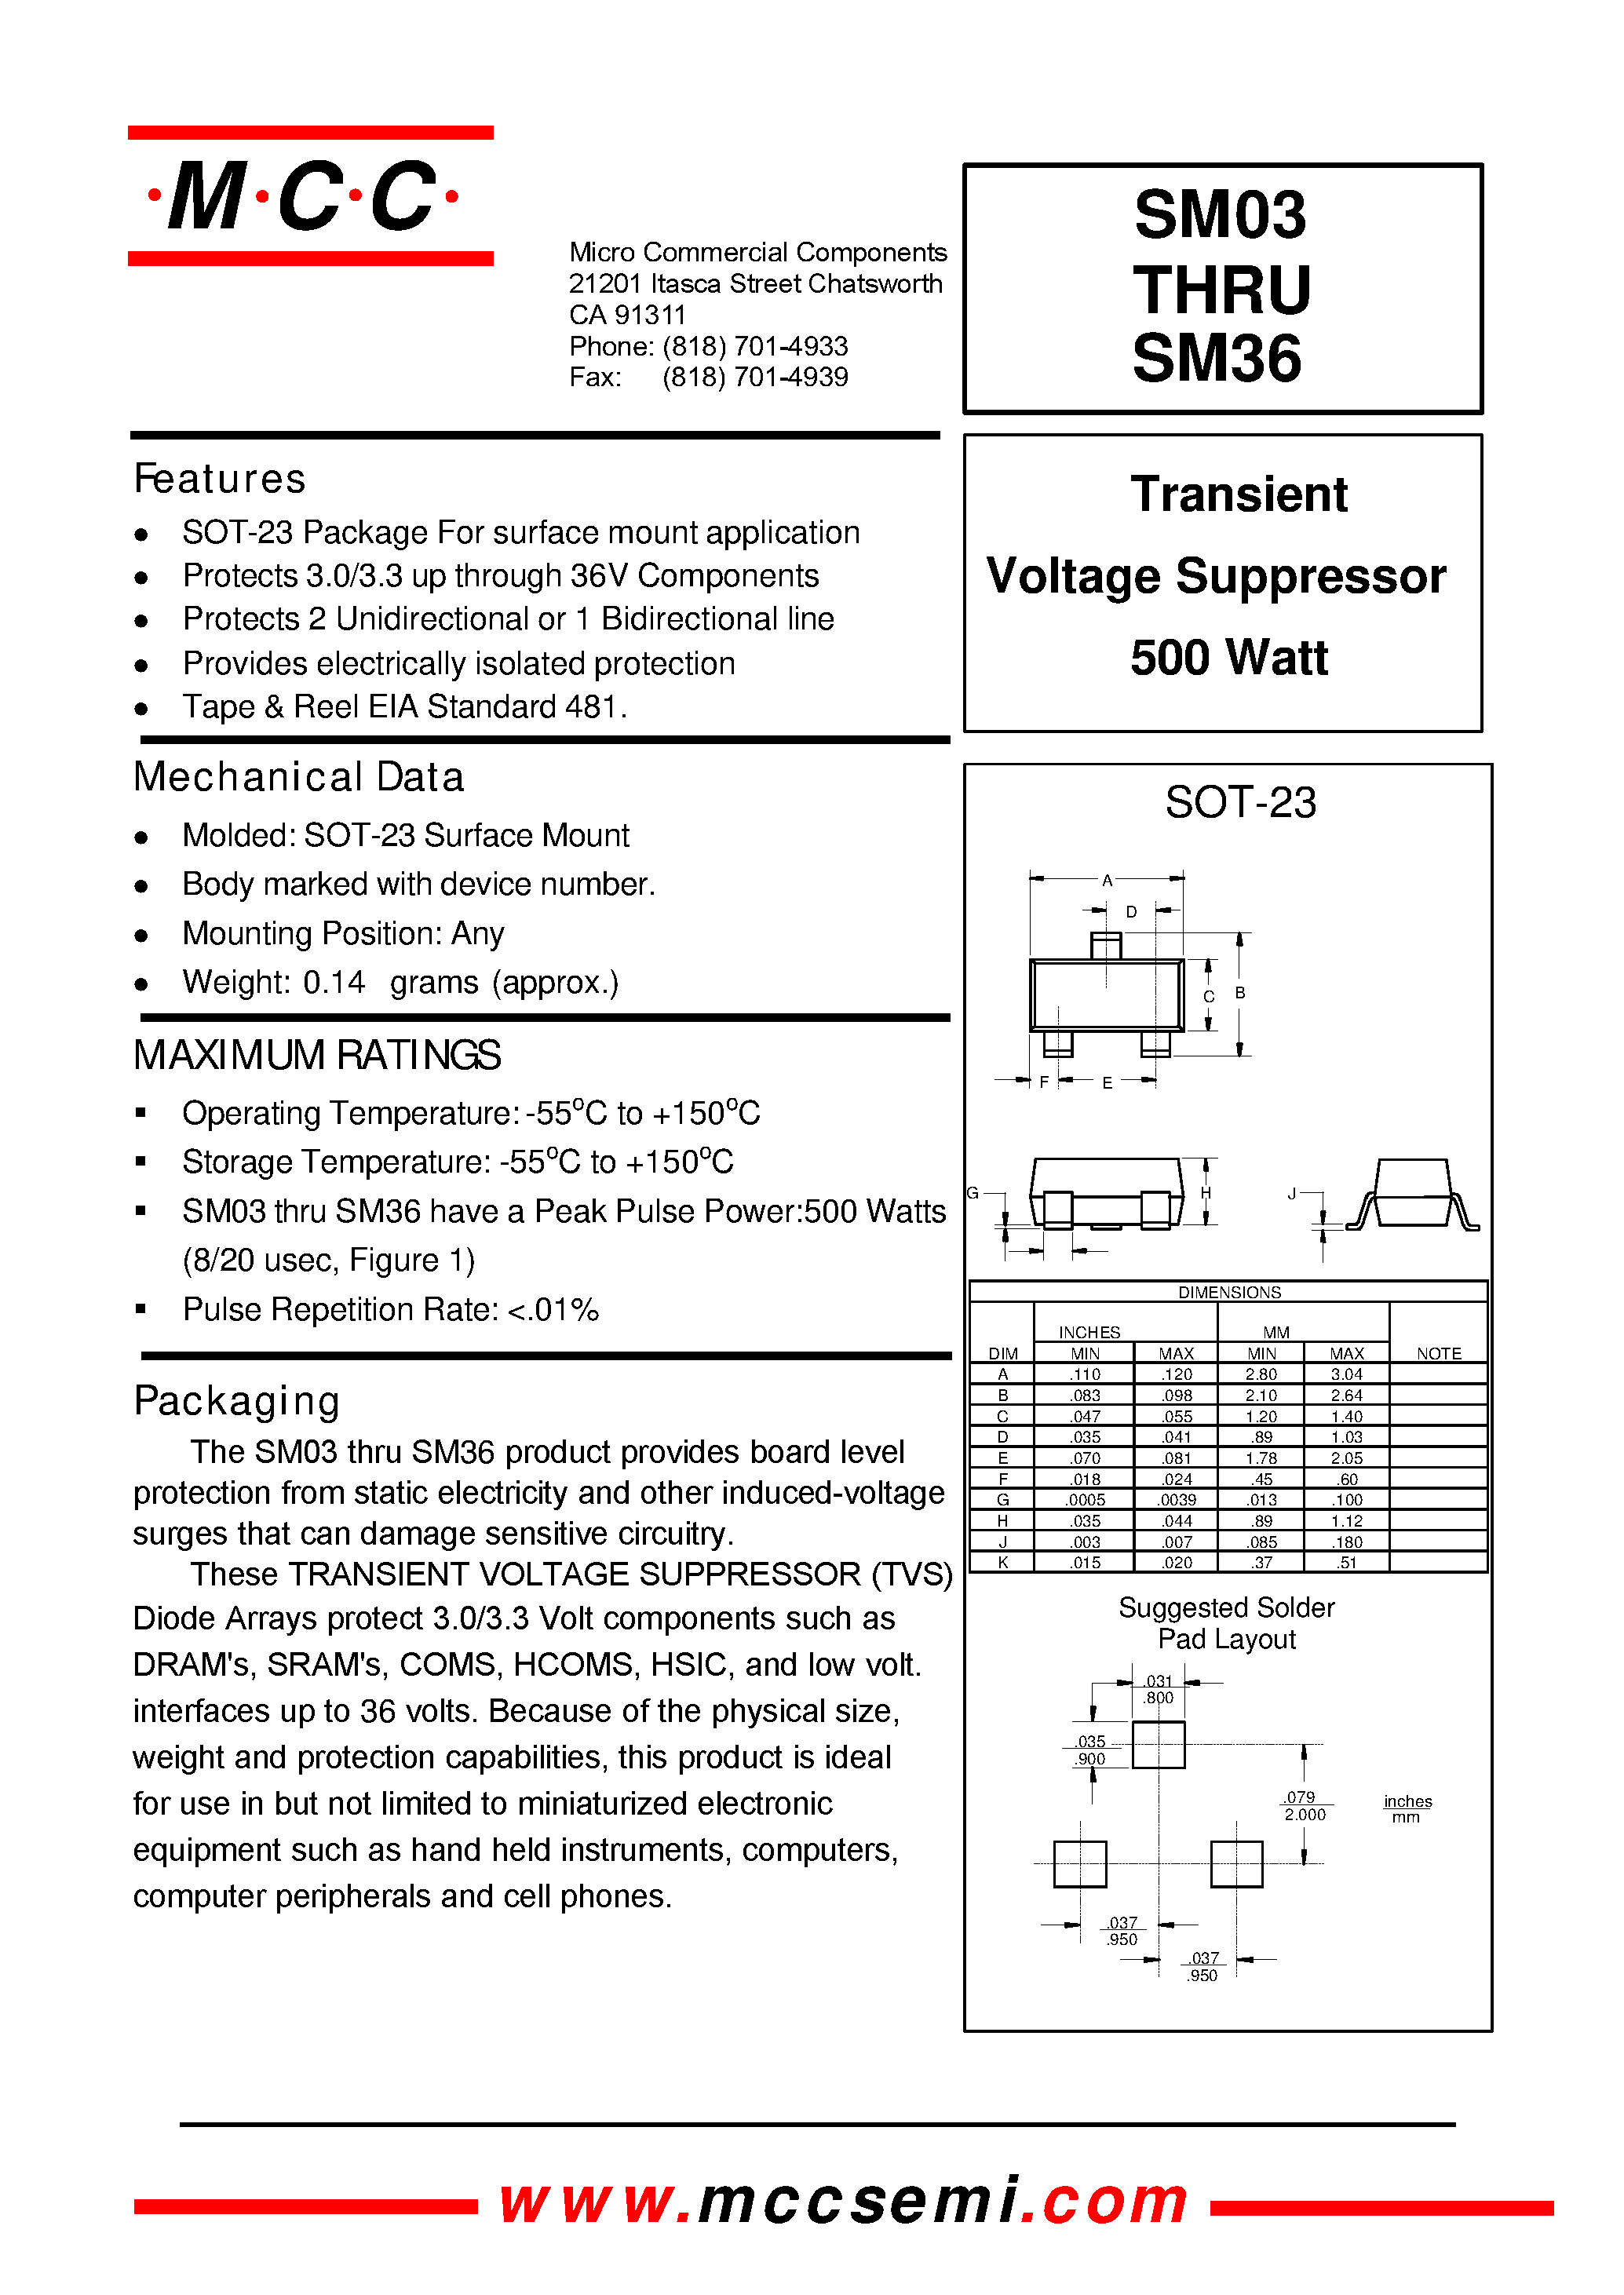 Даташит SM24 - Transient Voltage Suppressor 500 Watt страница 1